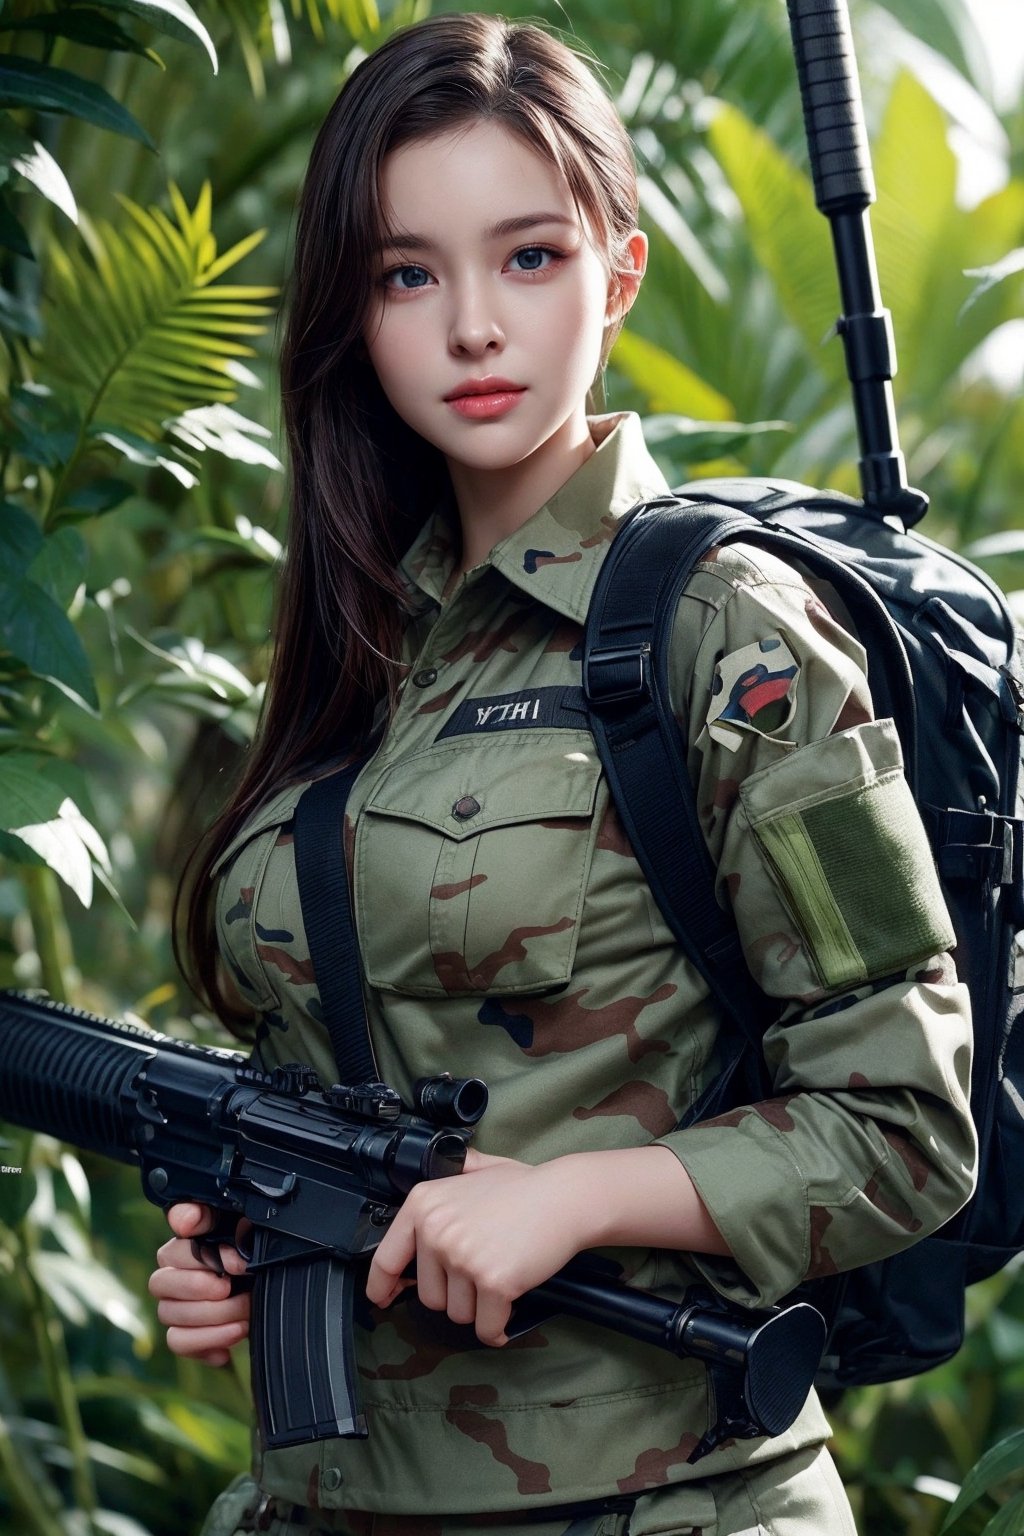 Girl Tactical Camouflage Uniform by UriPaperTheFan on DeviantArt